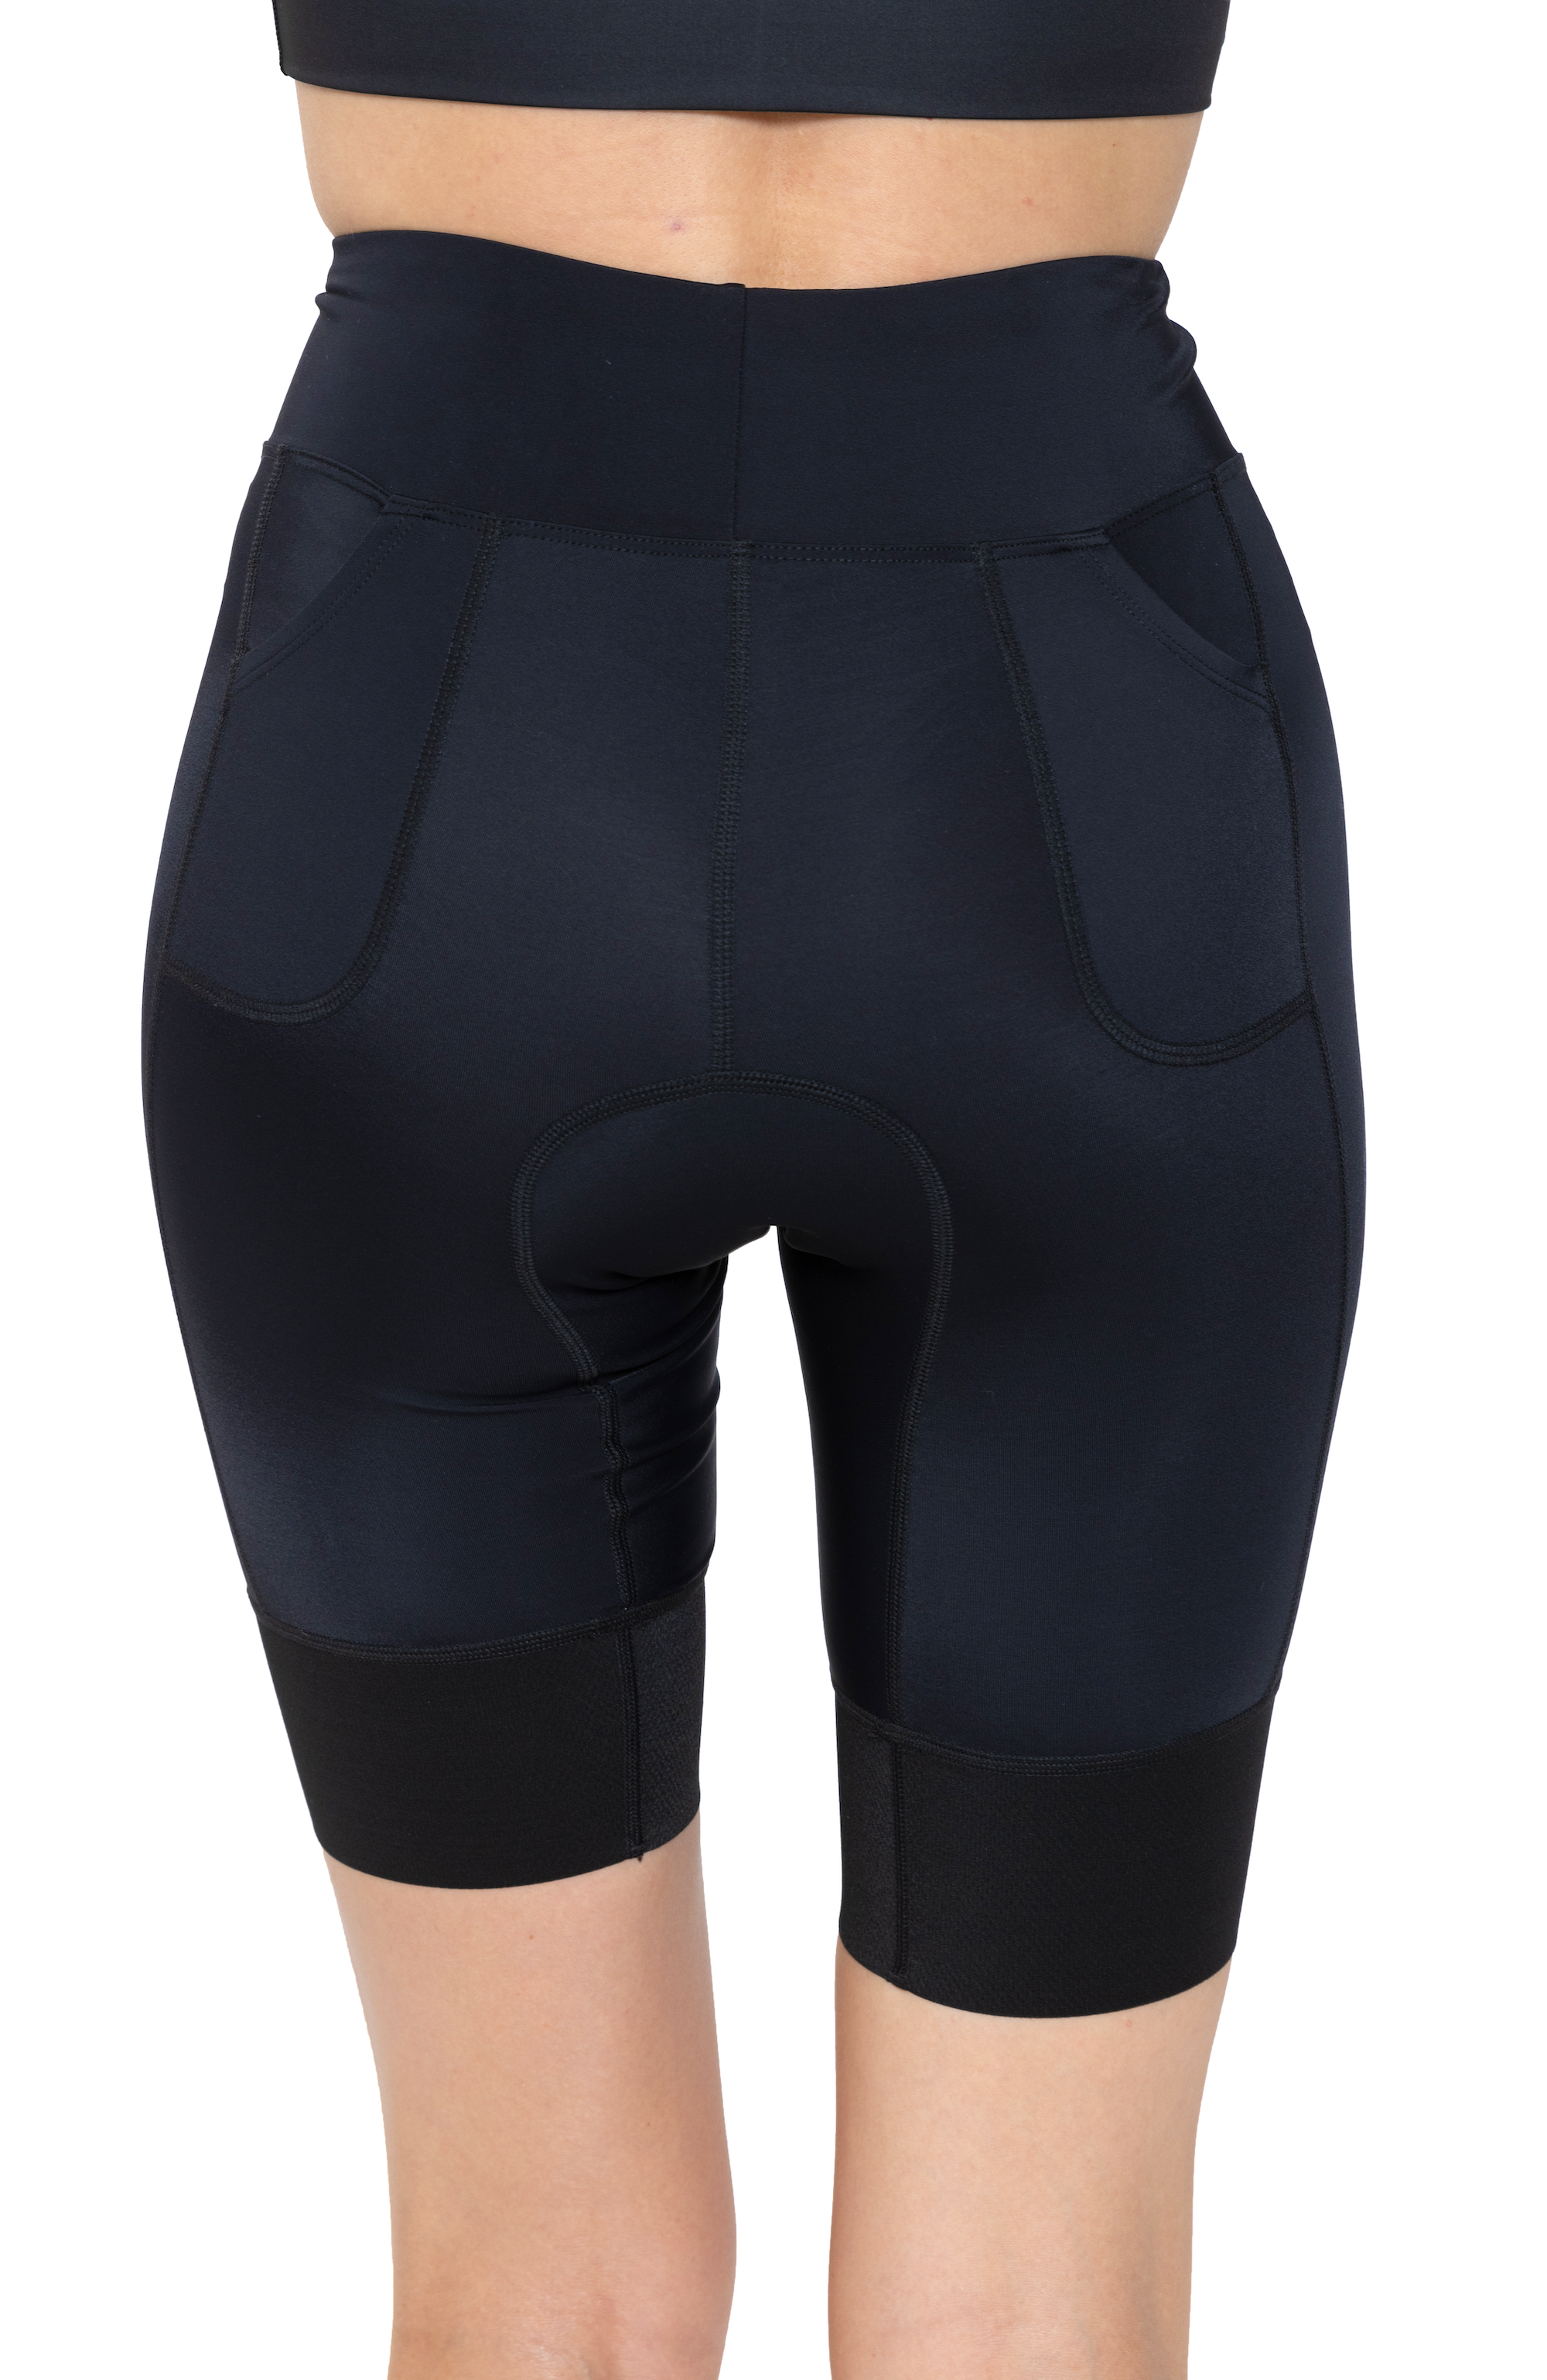 Sports cycling shorts - Black - Ladies